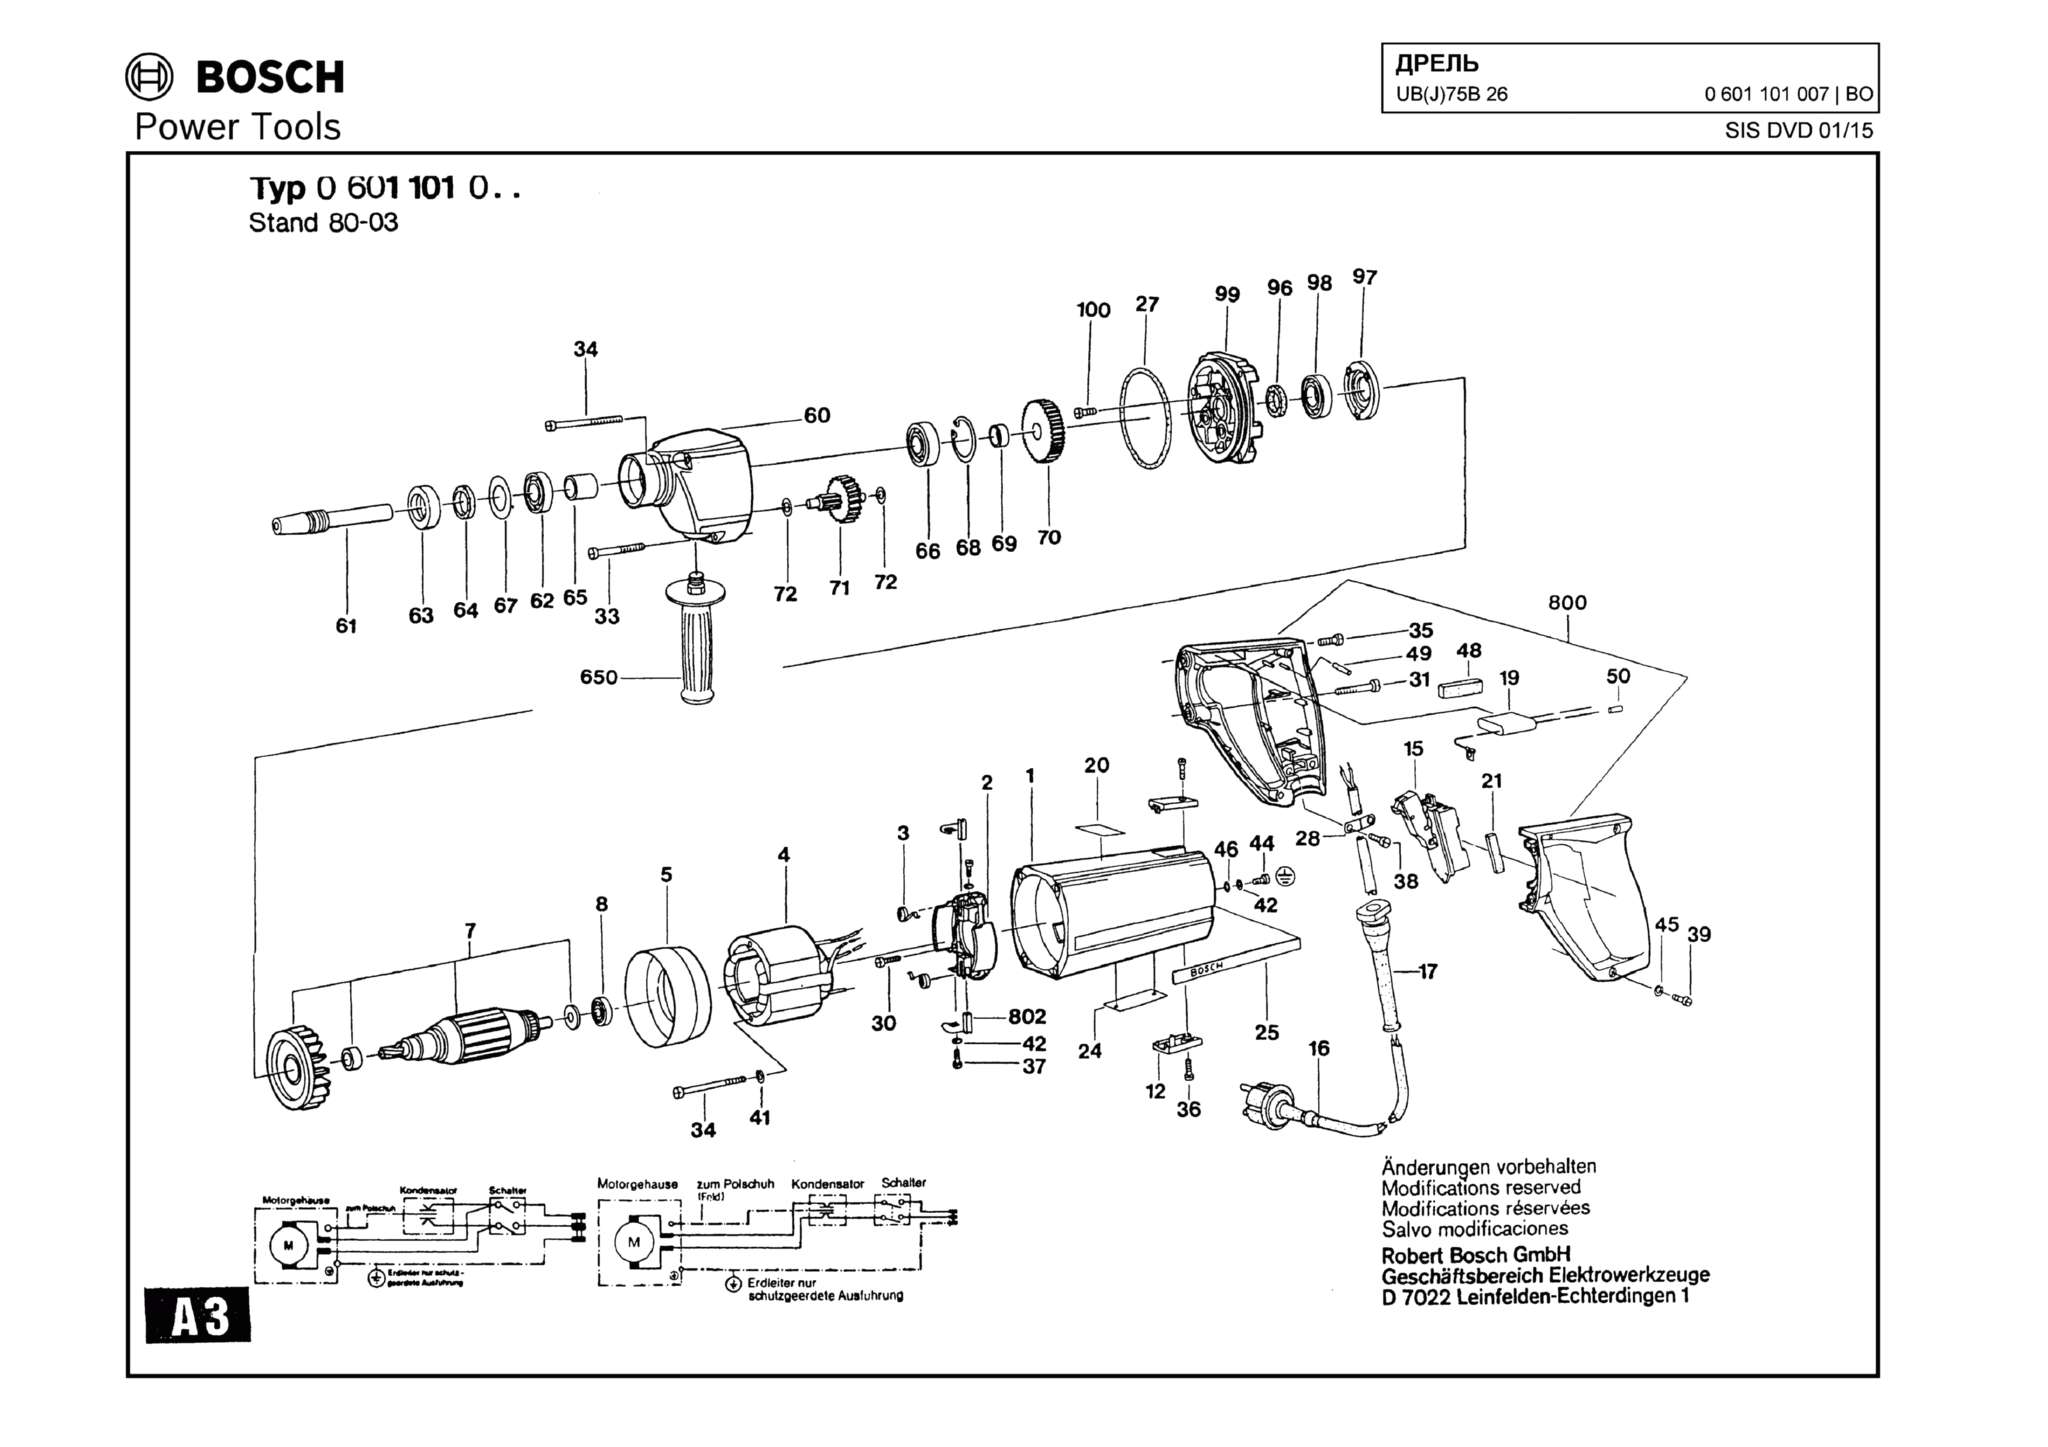 Запчасти, схема и деталировка Bosch UB(J)75B 26 (ТИП 0601101007)